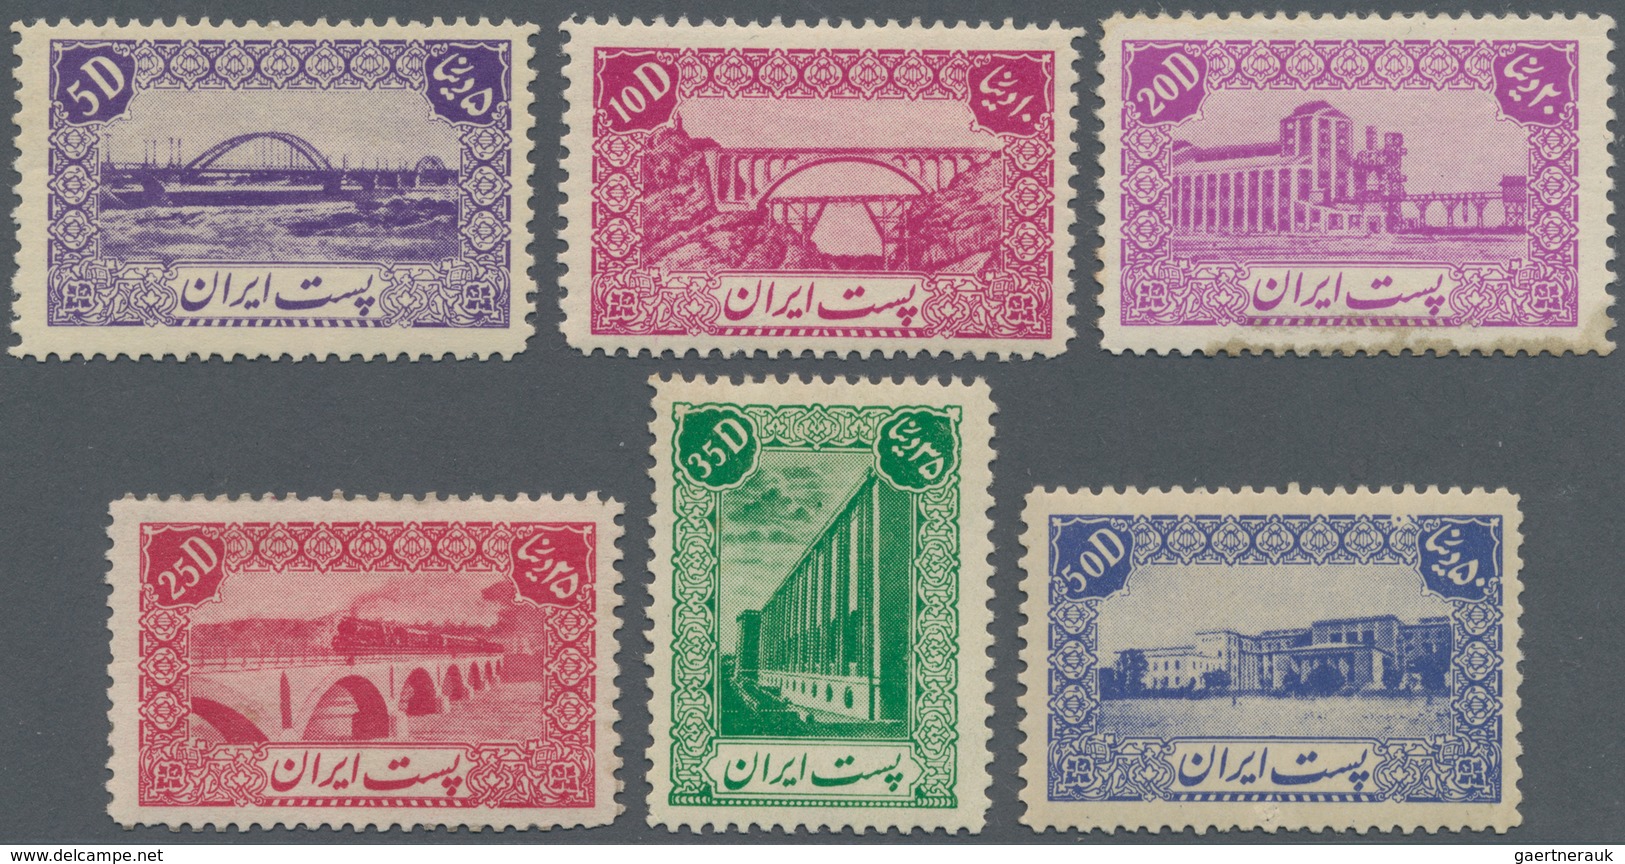 Iran: 1942, 15 Stamps Mint Hinged / Mint Never Hinged, Few Values Minor Faults, Fine - Iran